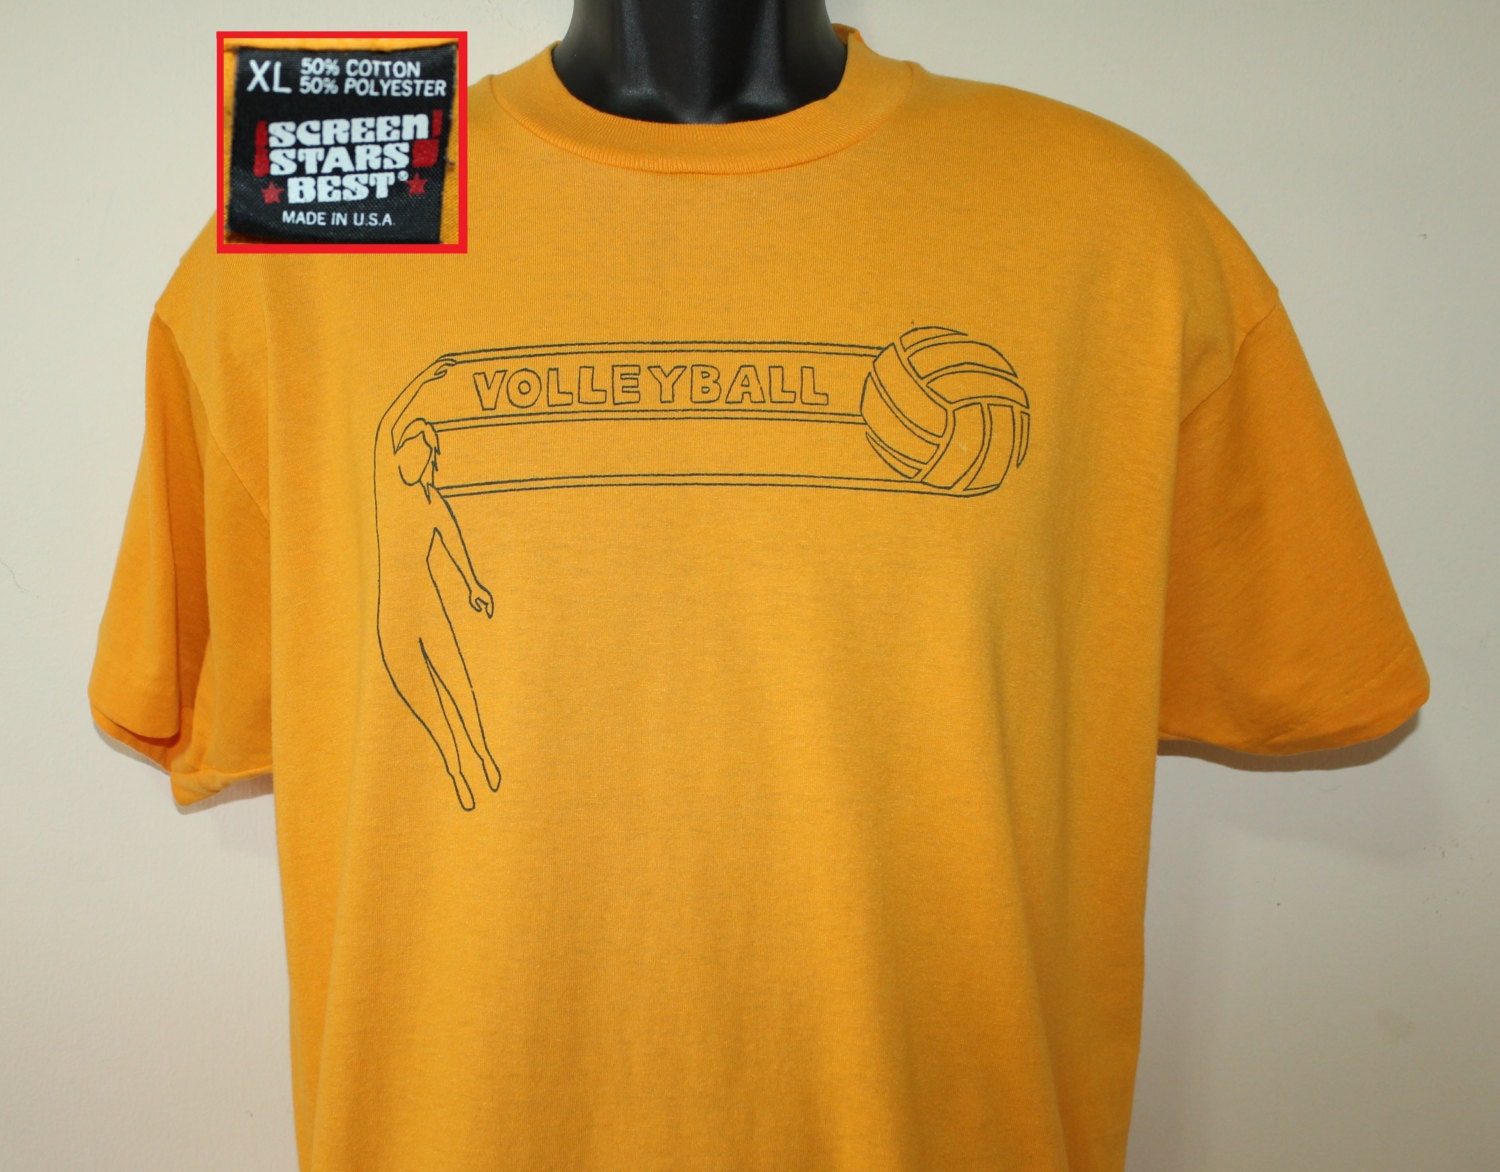 Volleyball vintage t-shirt XL yellow 50/50 Screen Stars Best